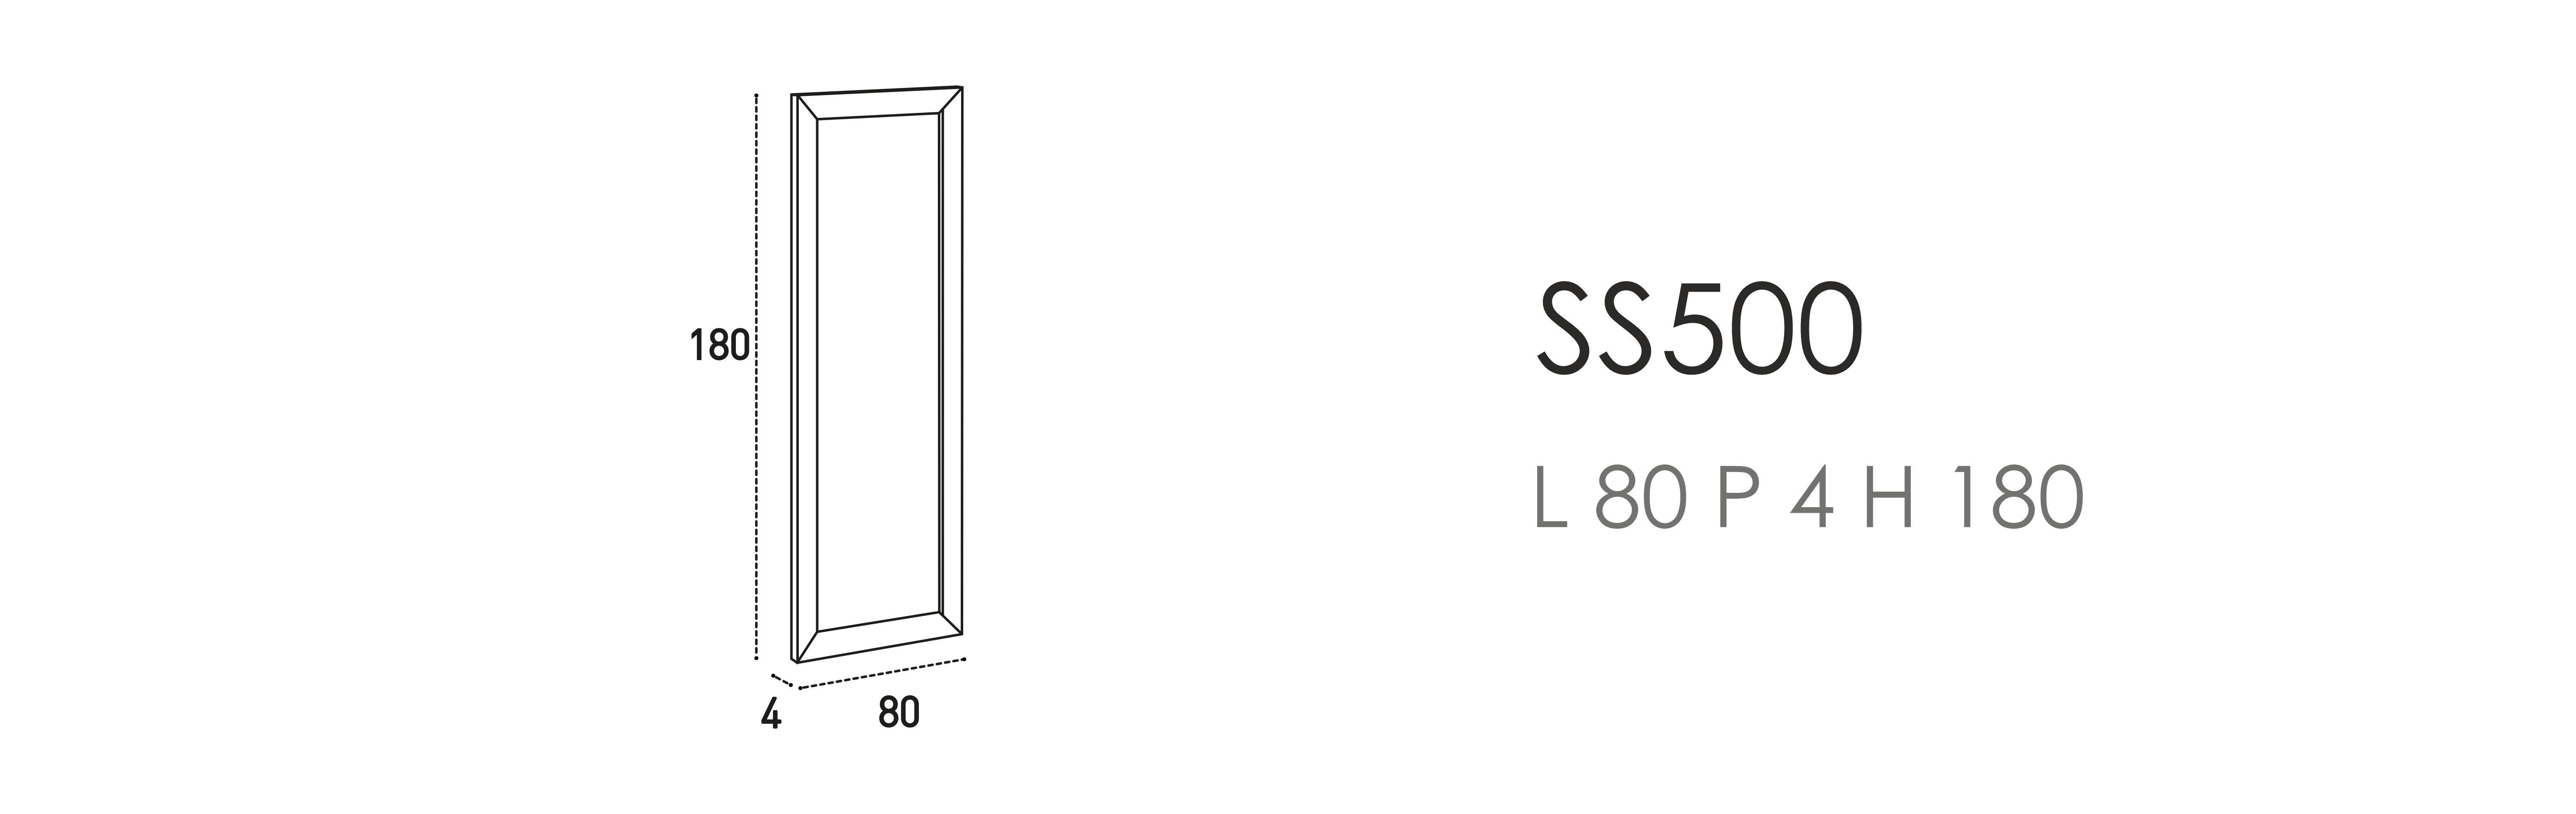 SS500 L 80 P 4 H 180